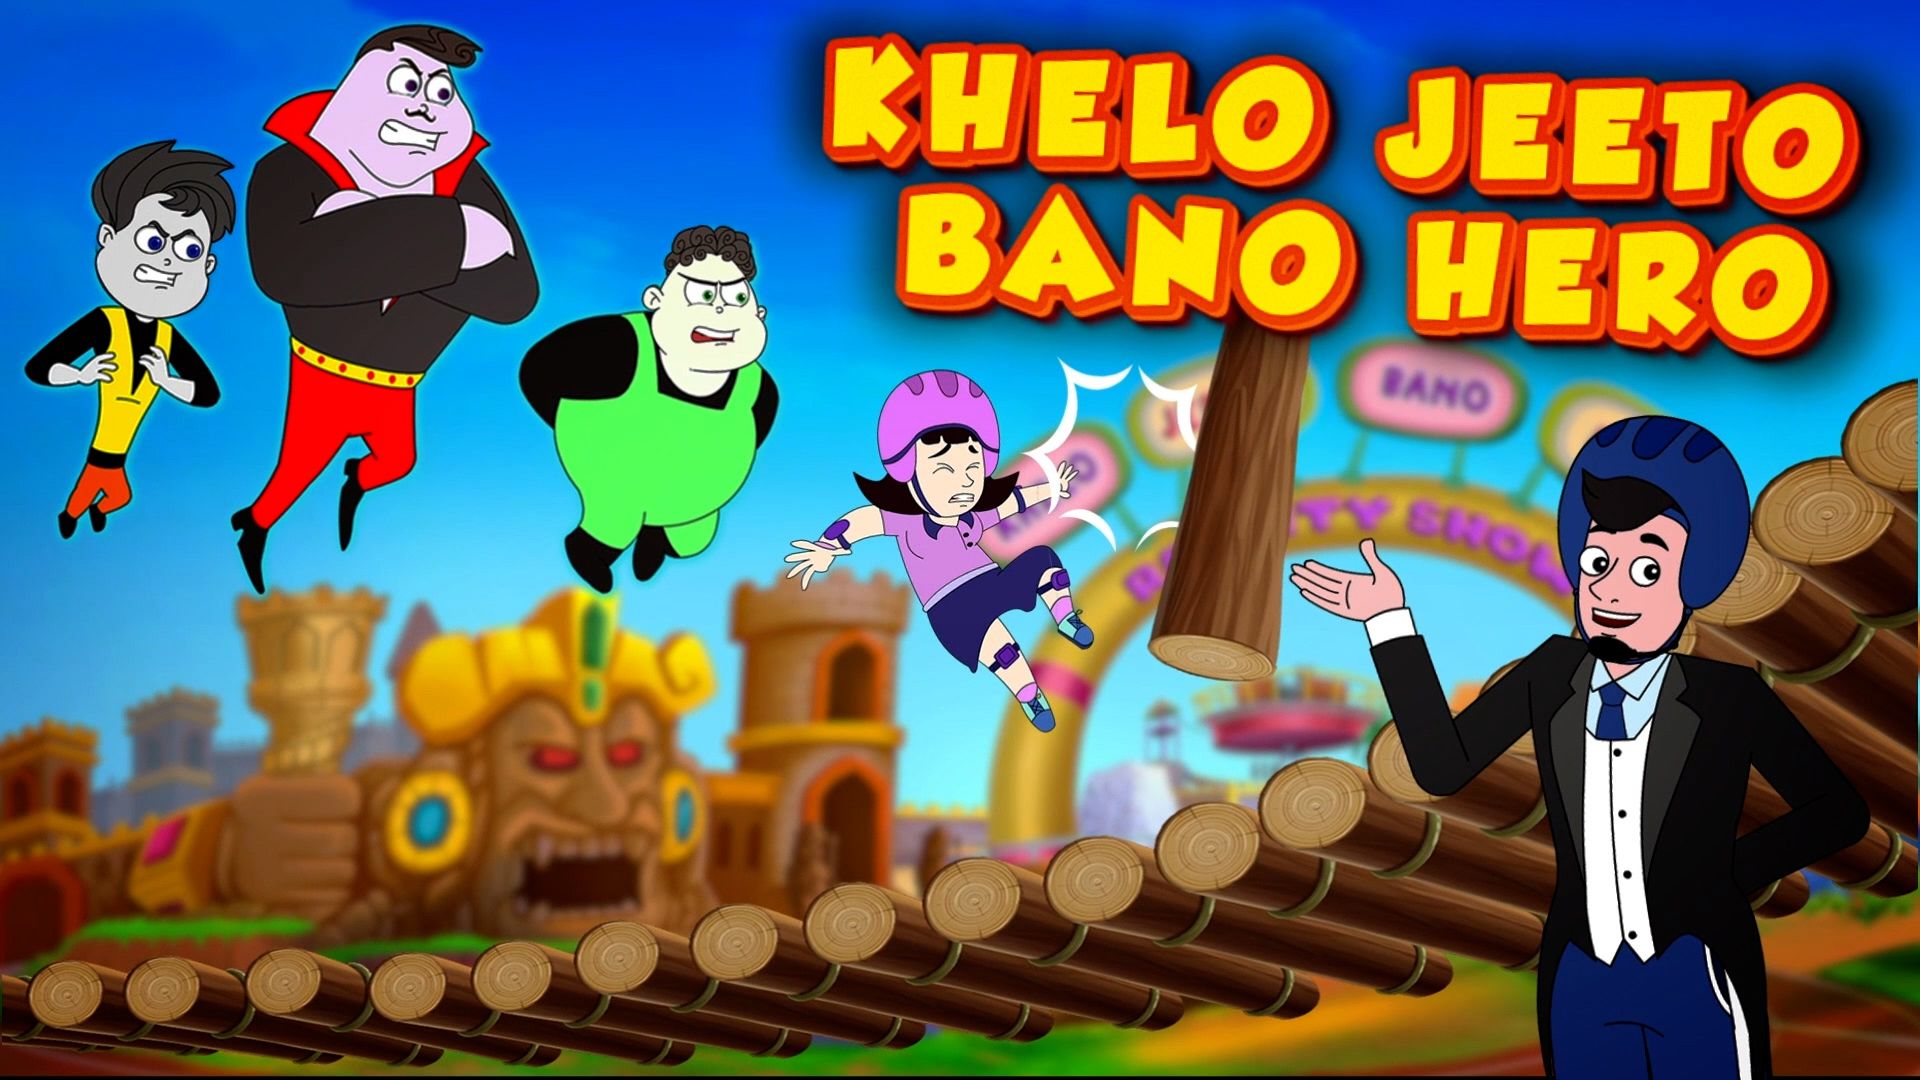 Khelo, Jeeto, Bano Hero